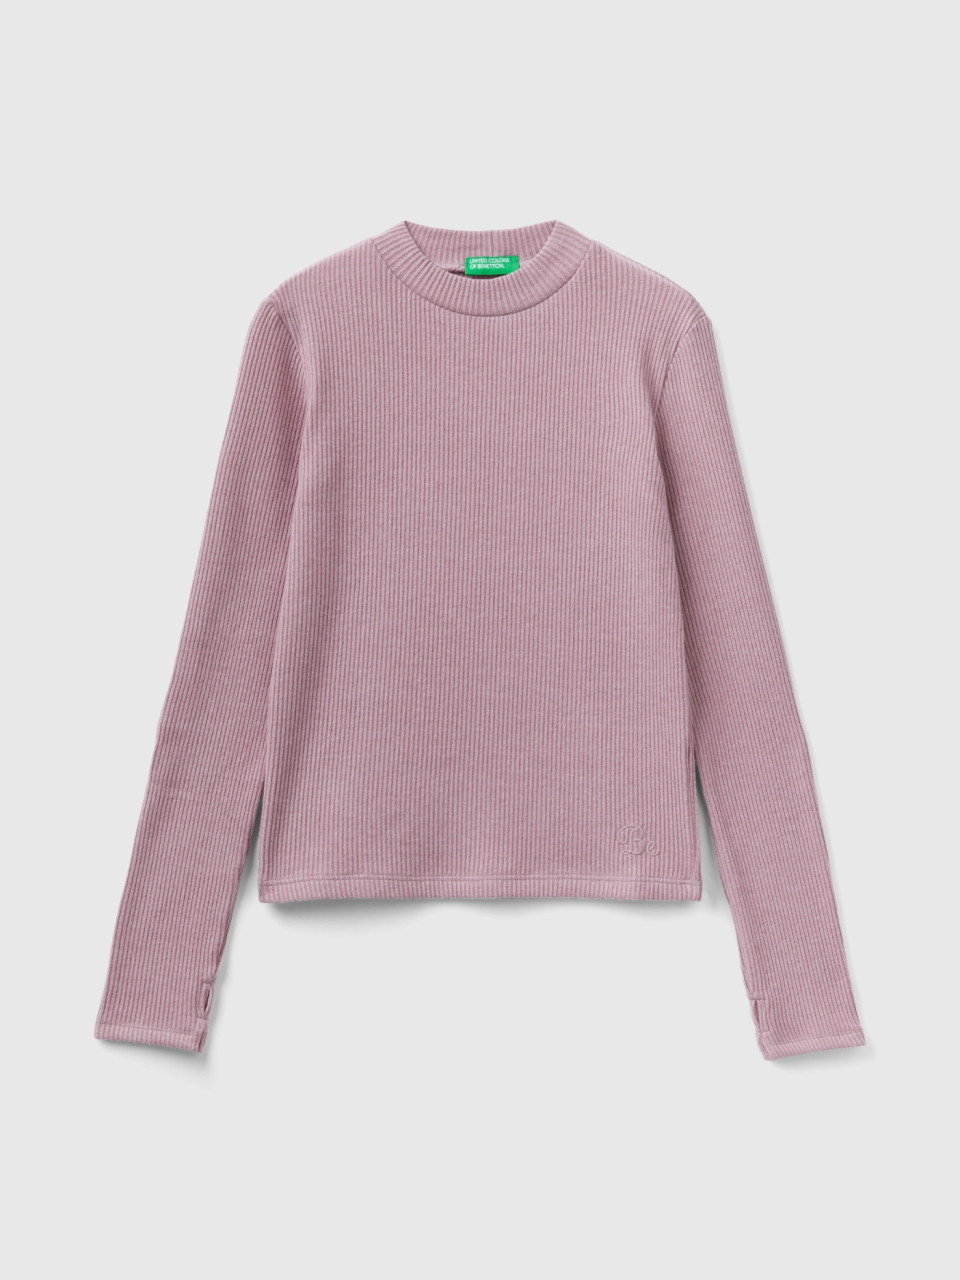 Benetton, Warm Slim Fit Ribbed T-shirt, Pink, Kids